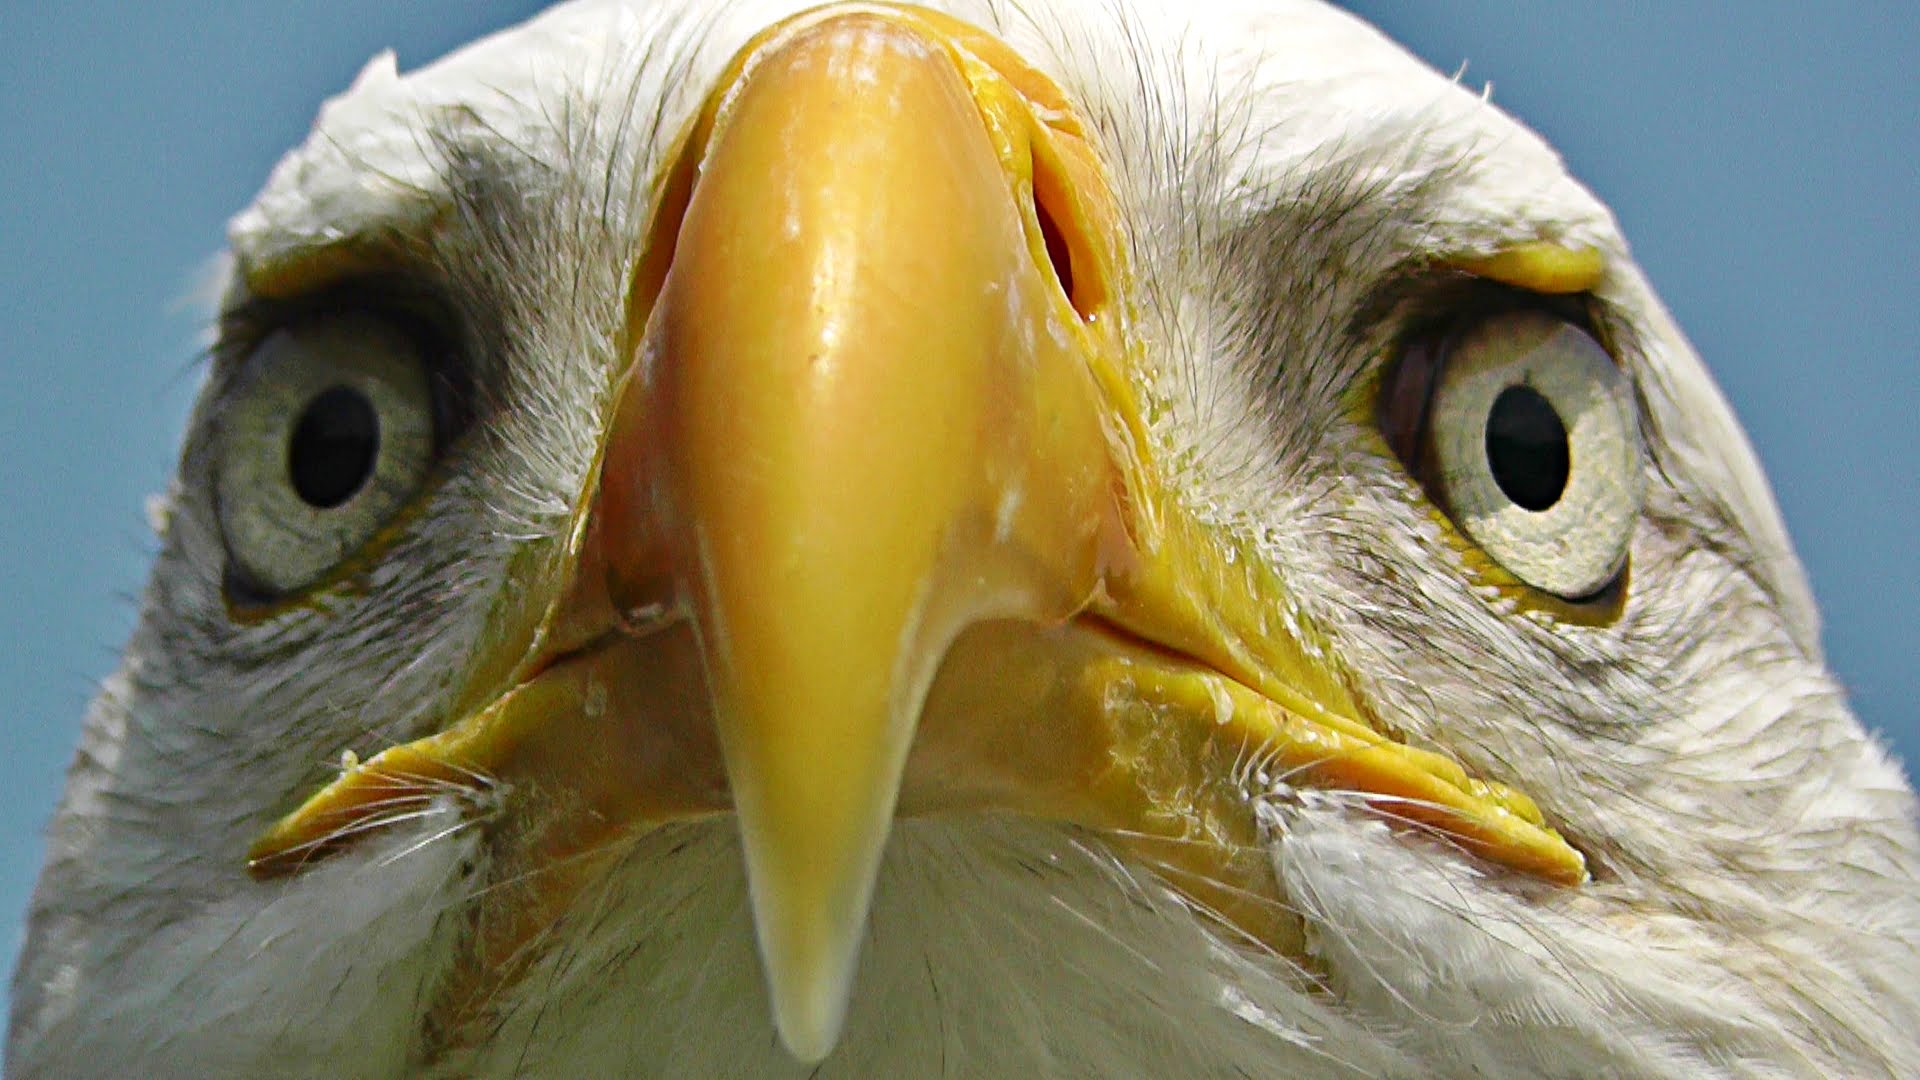 Bald Eagle Bird - Birds of Prey - Awesome Close Up - YouTube